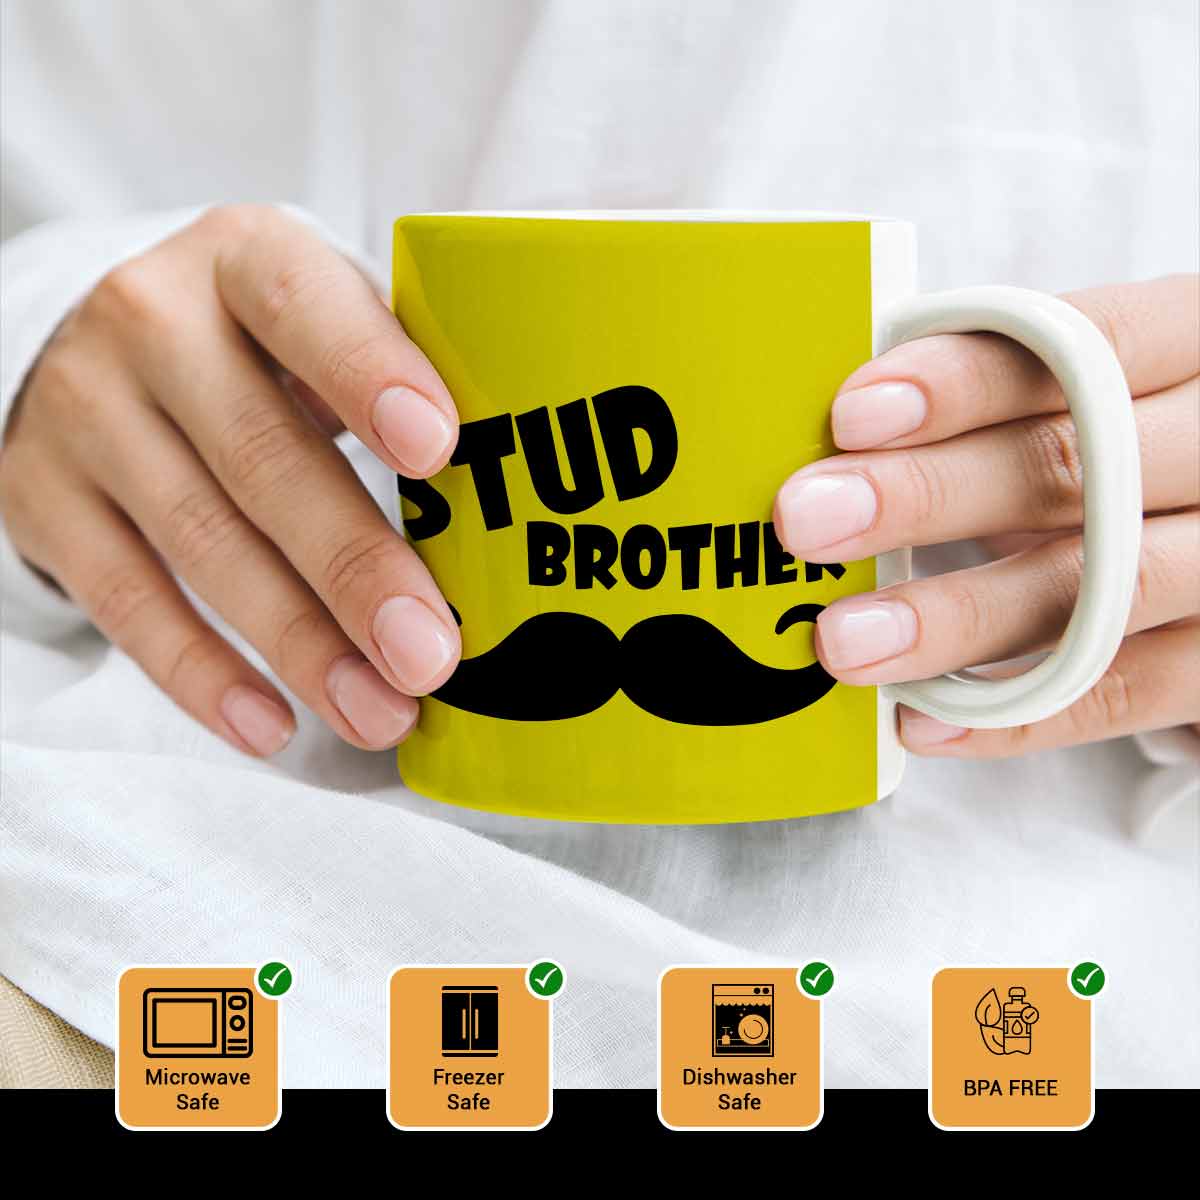 Stud Brother Coffee Mug